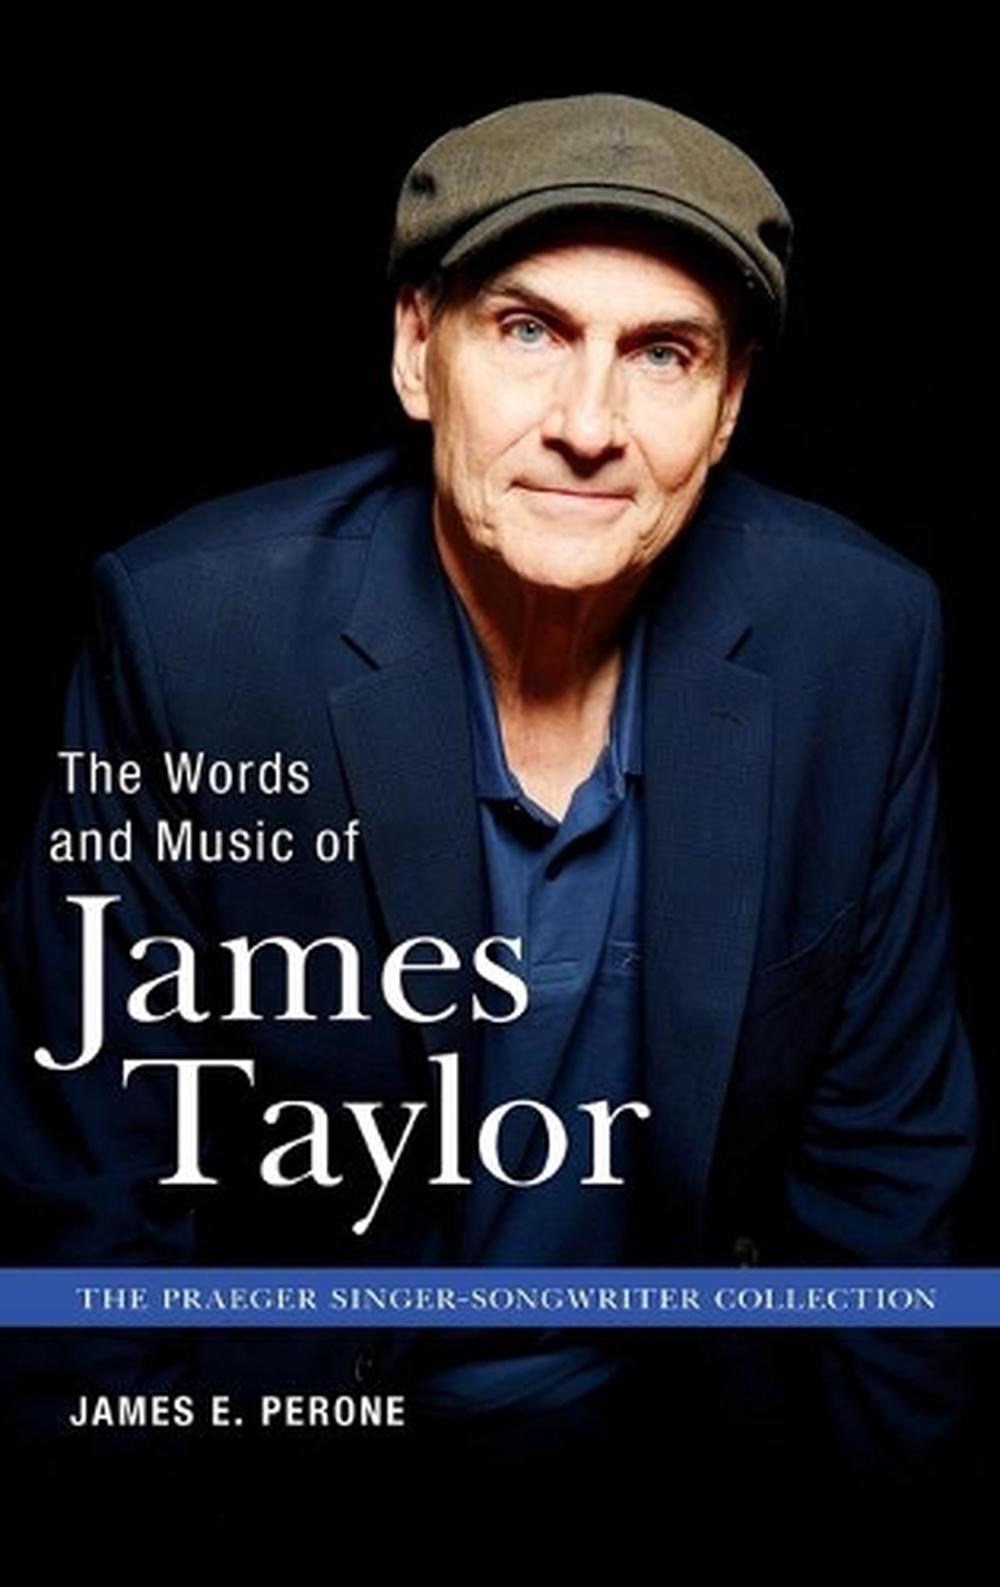 best james taylor biography book